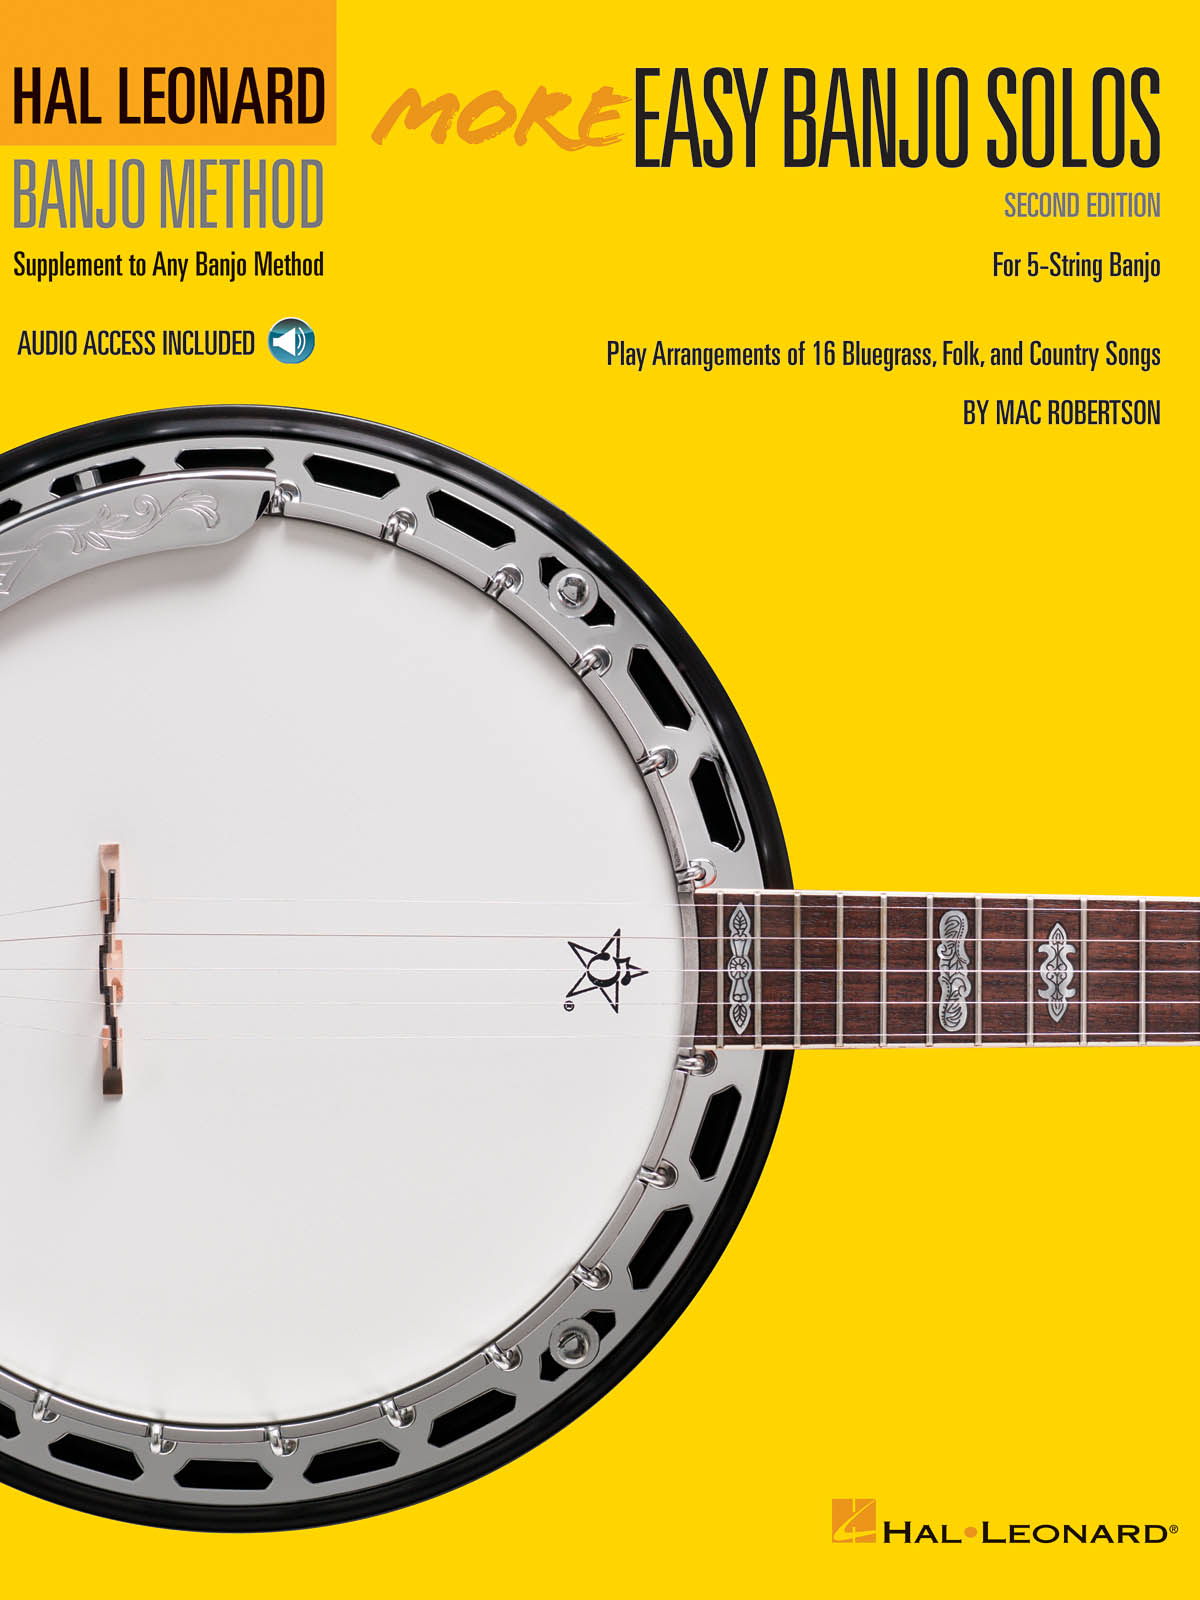 More Easy Banjo Solos - 2nd Edition - for 5-String Banjo